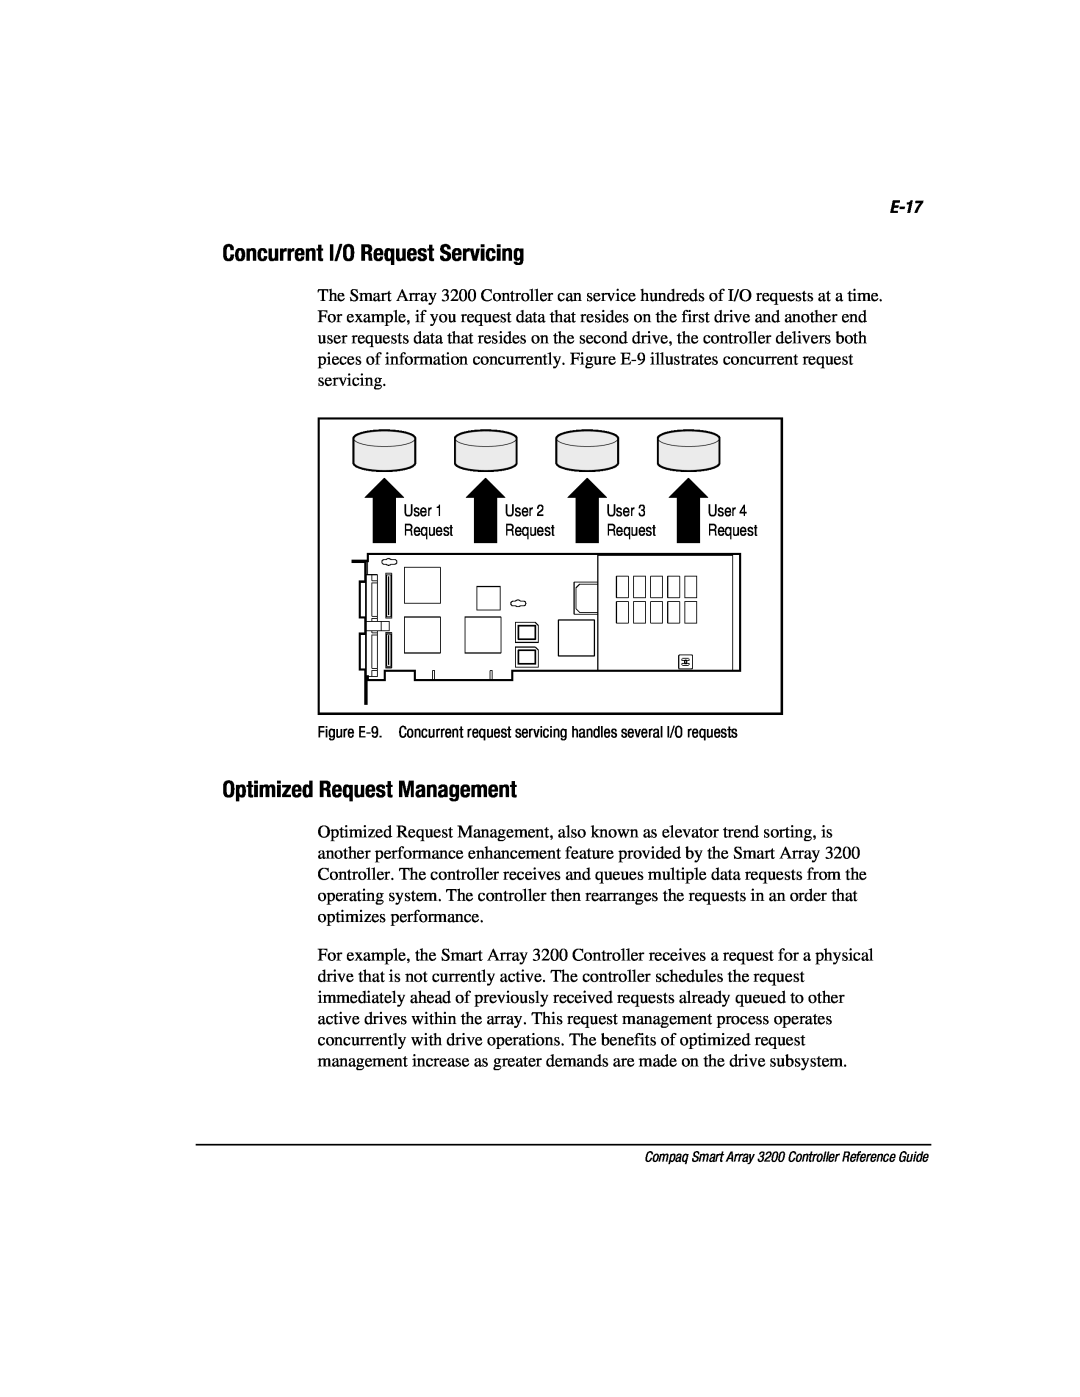 Compaq 3200 manual Concurrent I/O Request Servicing, Optimized Request Management, E-17 